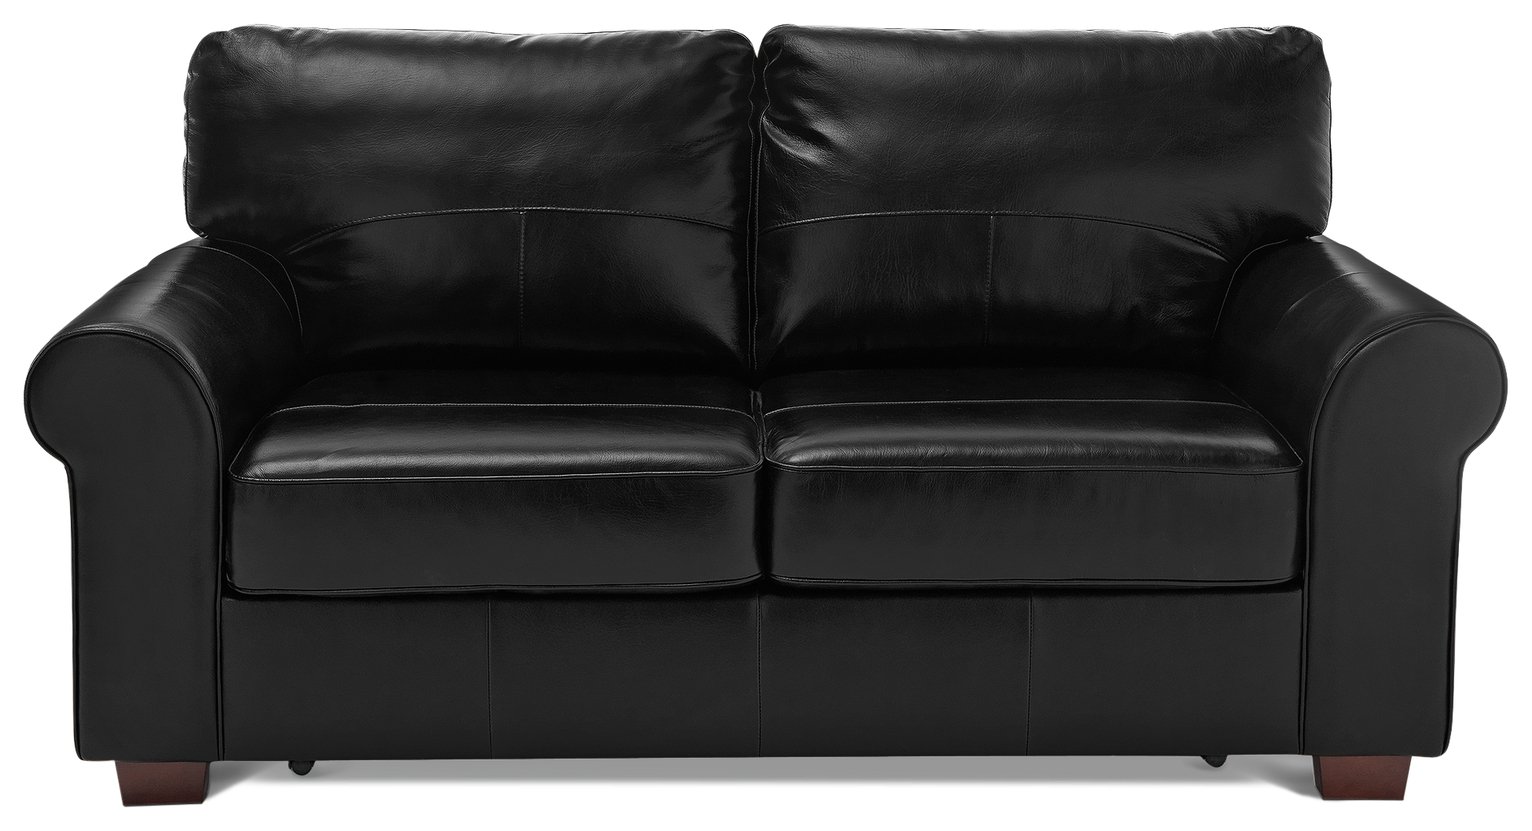 Habitat Salisbury Leather 2 Seater Sofa Bed - Black